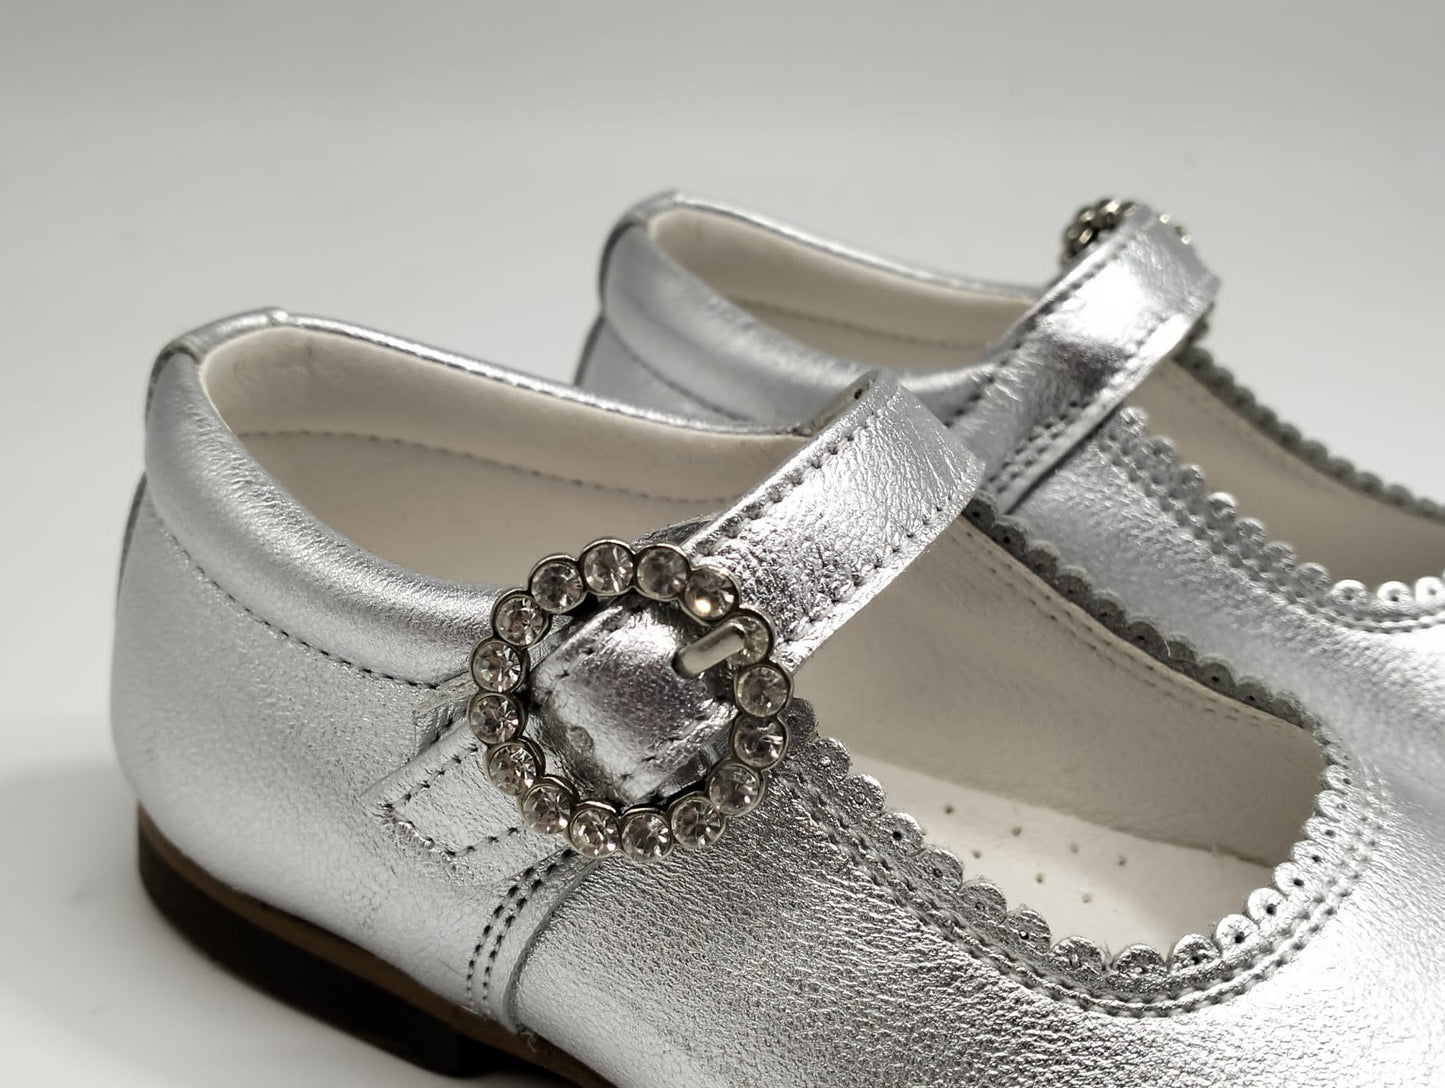 6270-1 Silver Shoe with Diamante Buckle